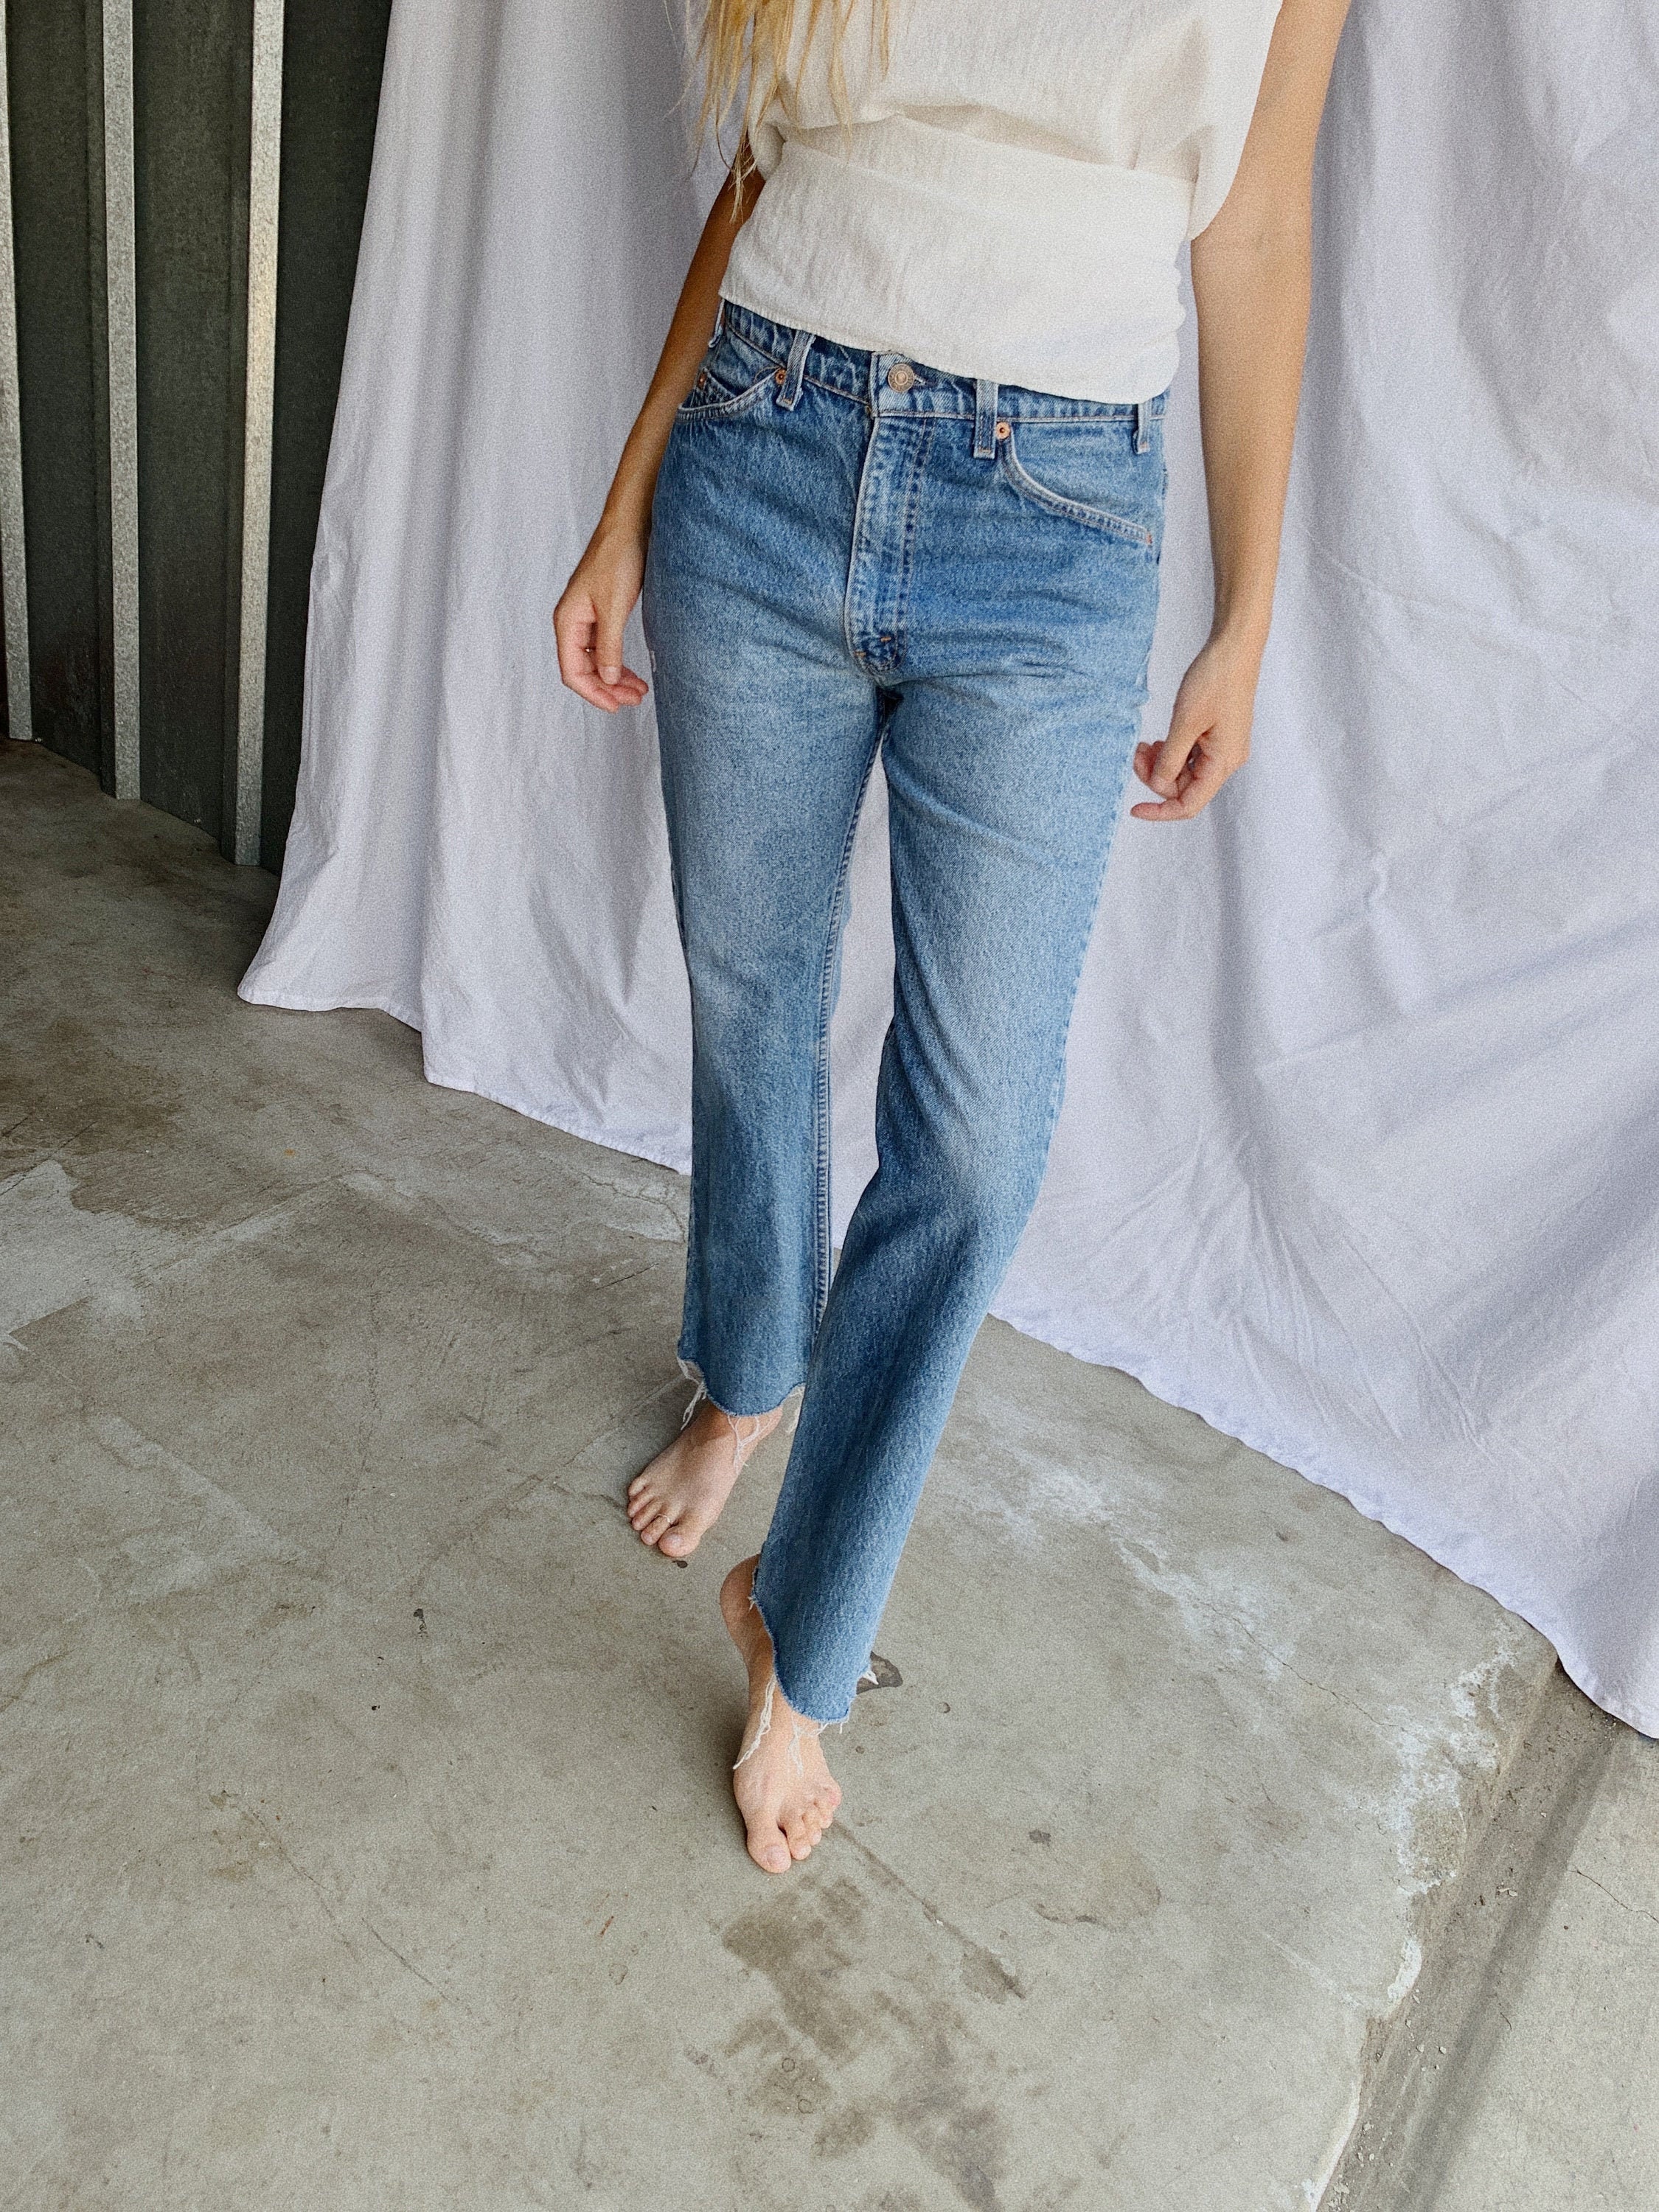 size 31 jeans